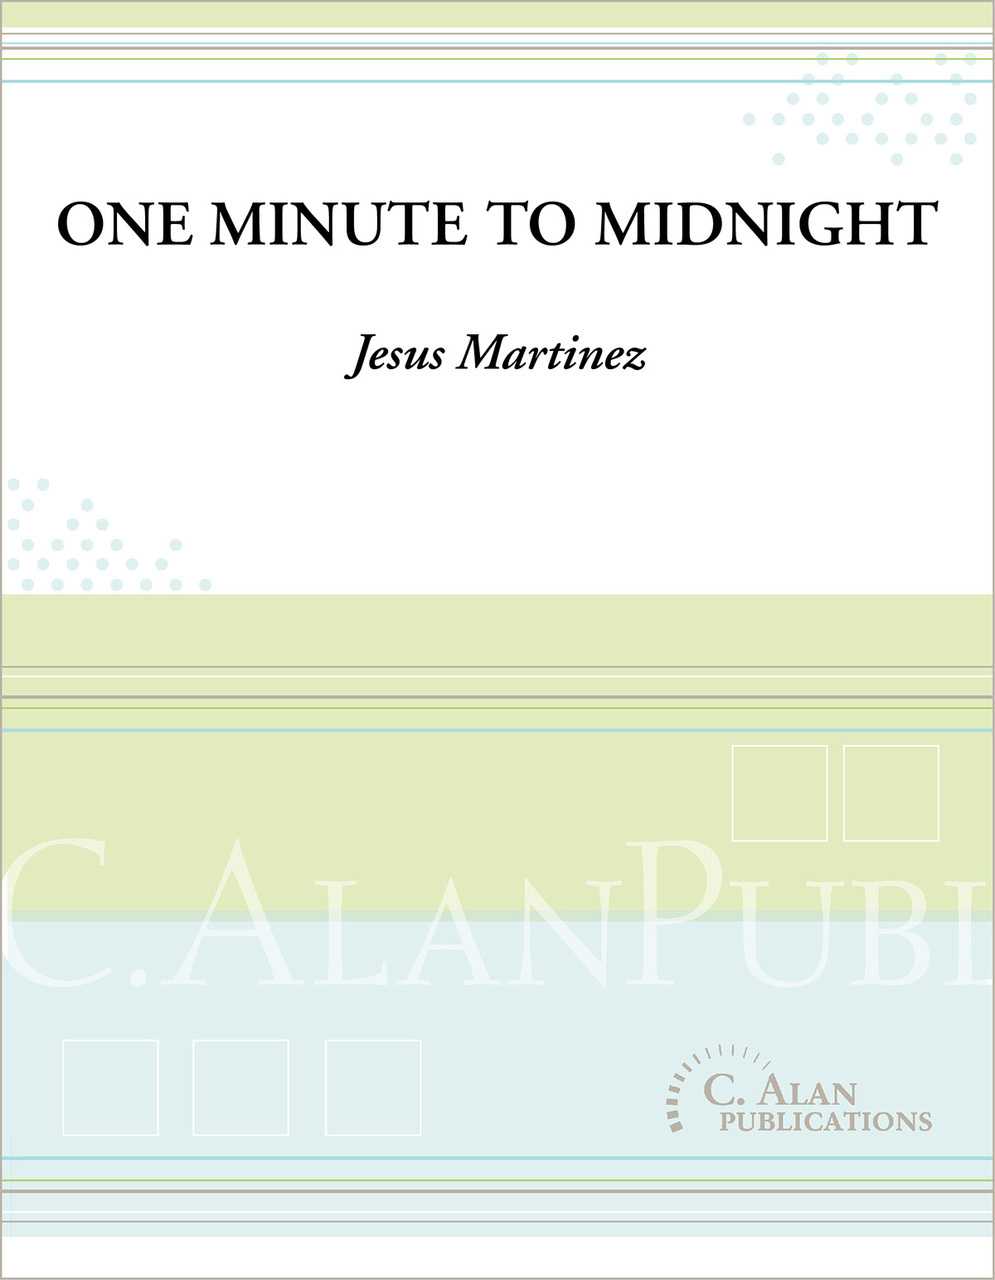 One Minute to Midnight by Jesus Martinez